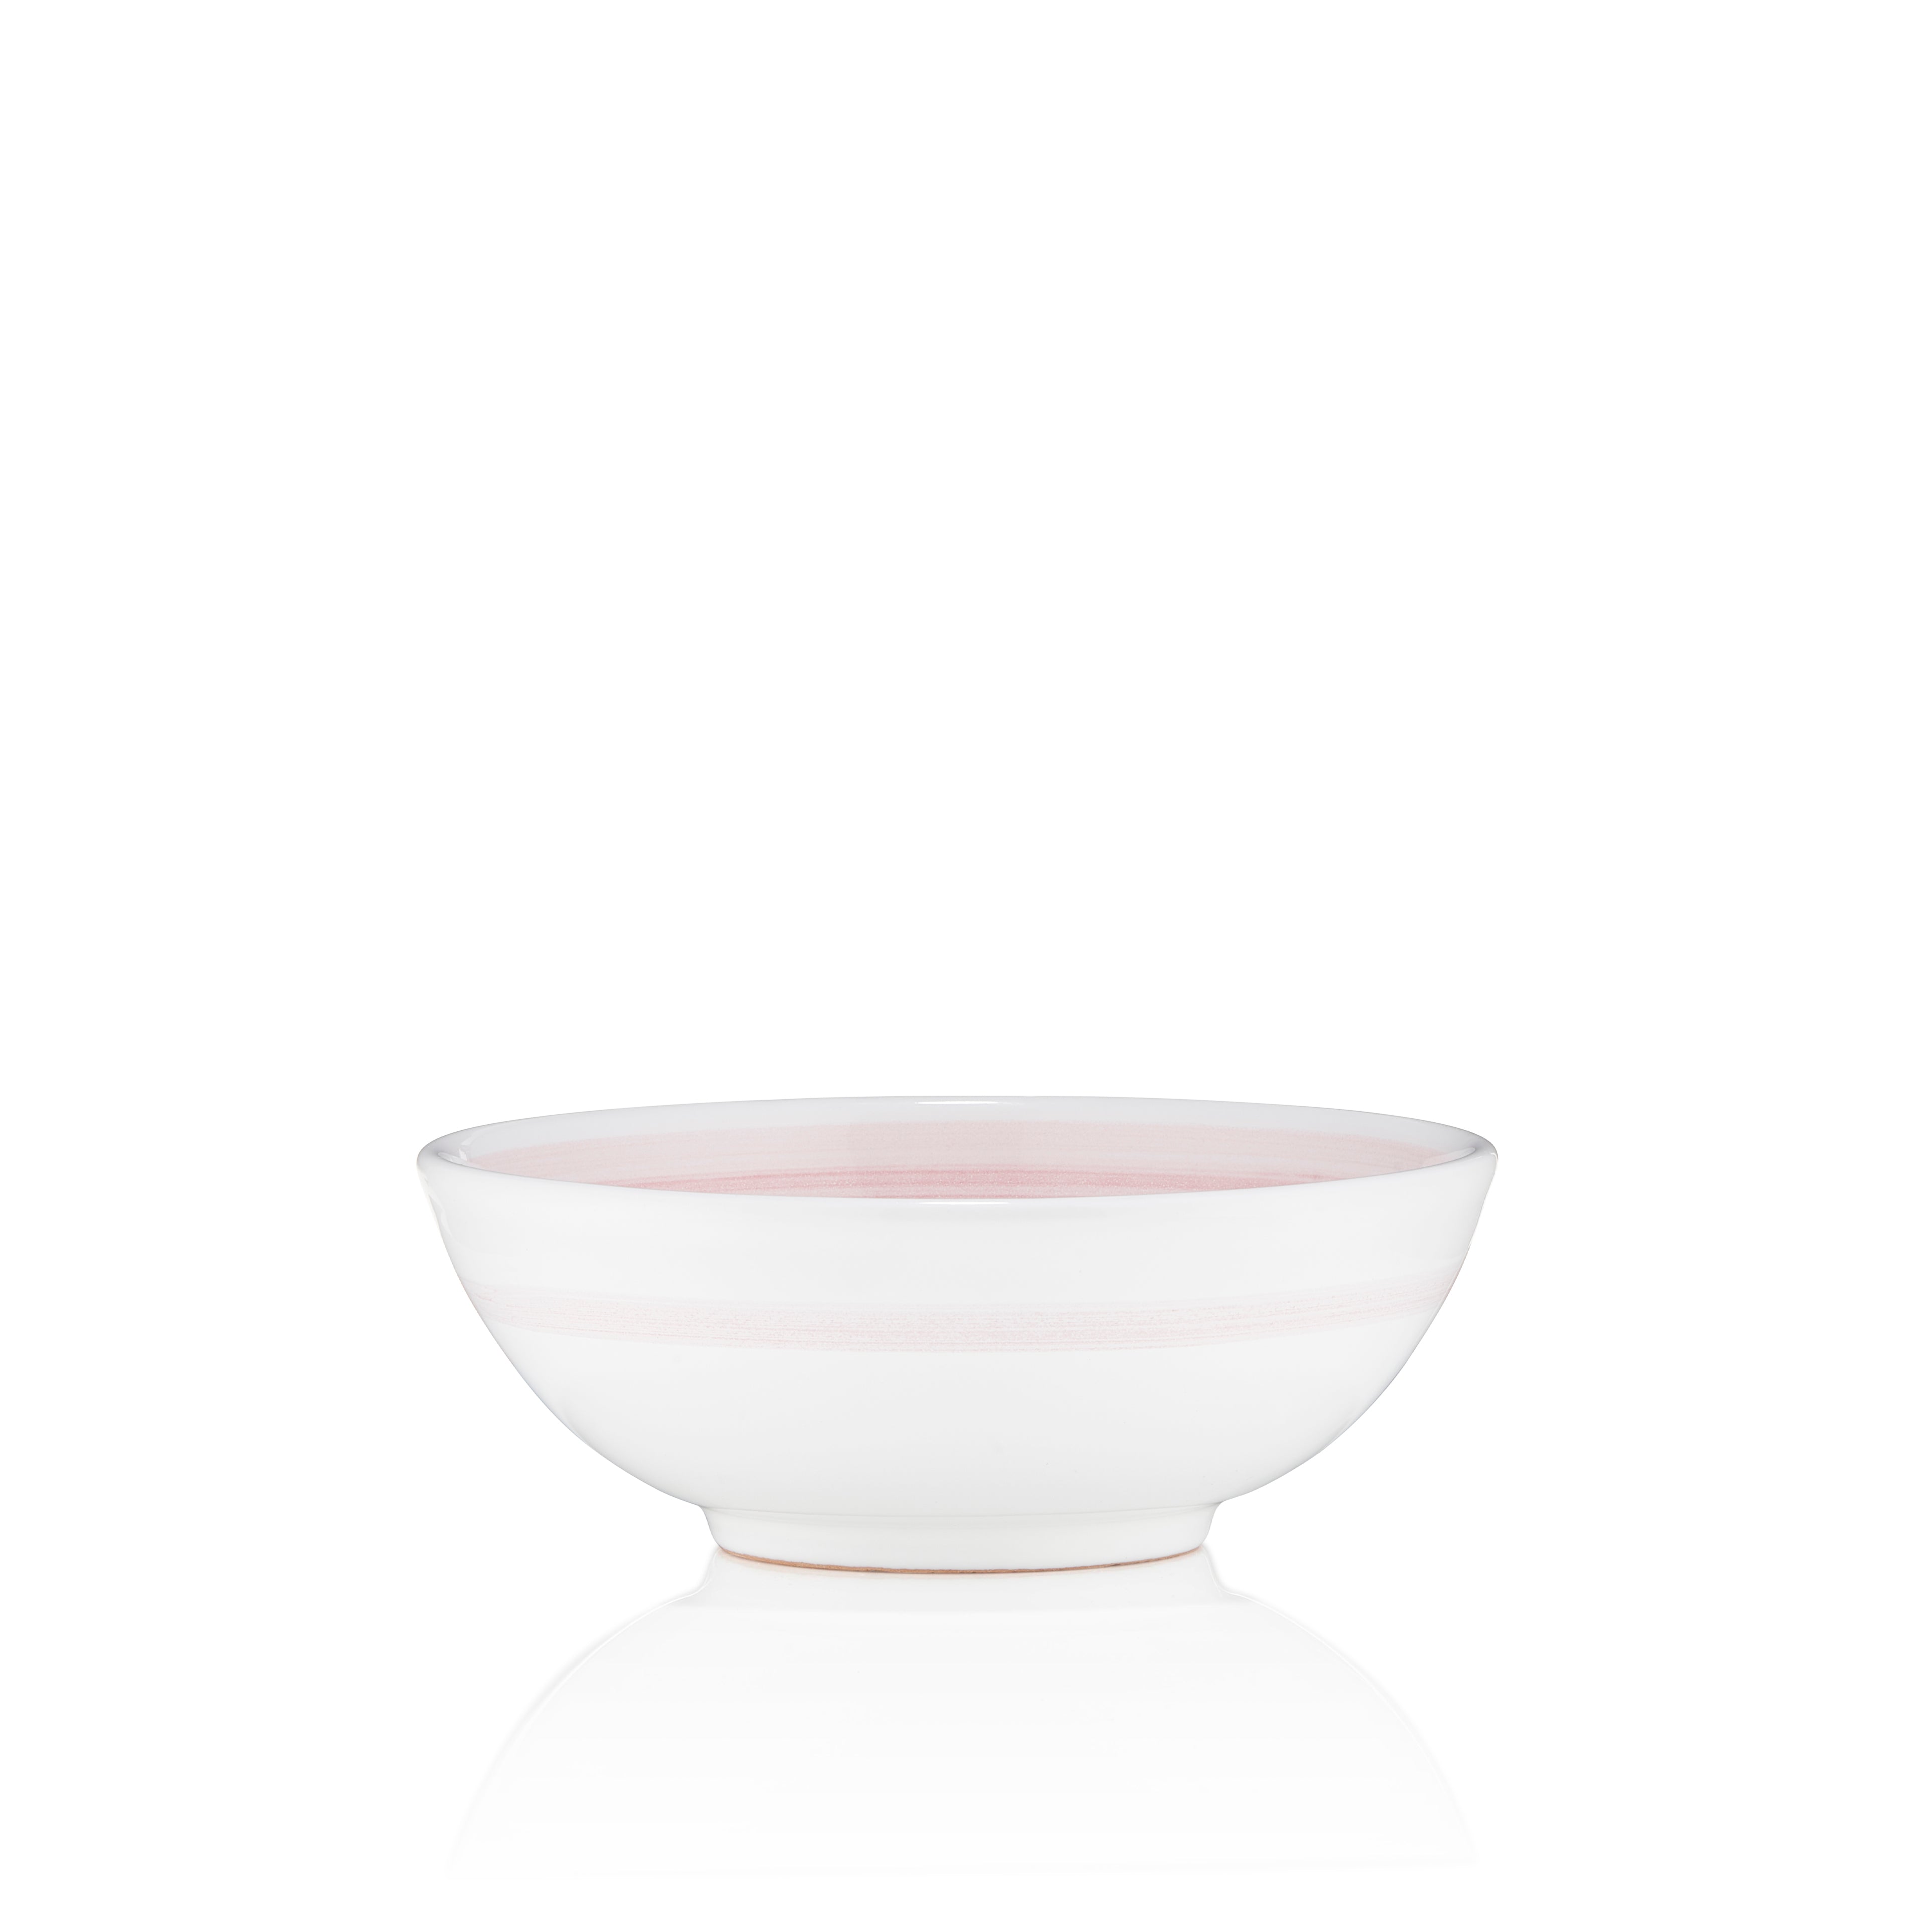 S&B 'Brushed' Ceramic Soup Bowl in Pastel Pink, 16cm